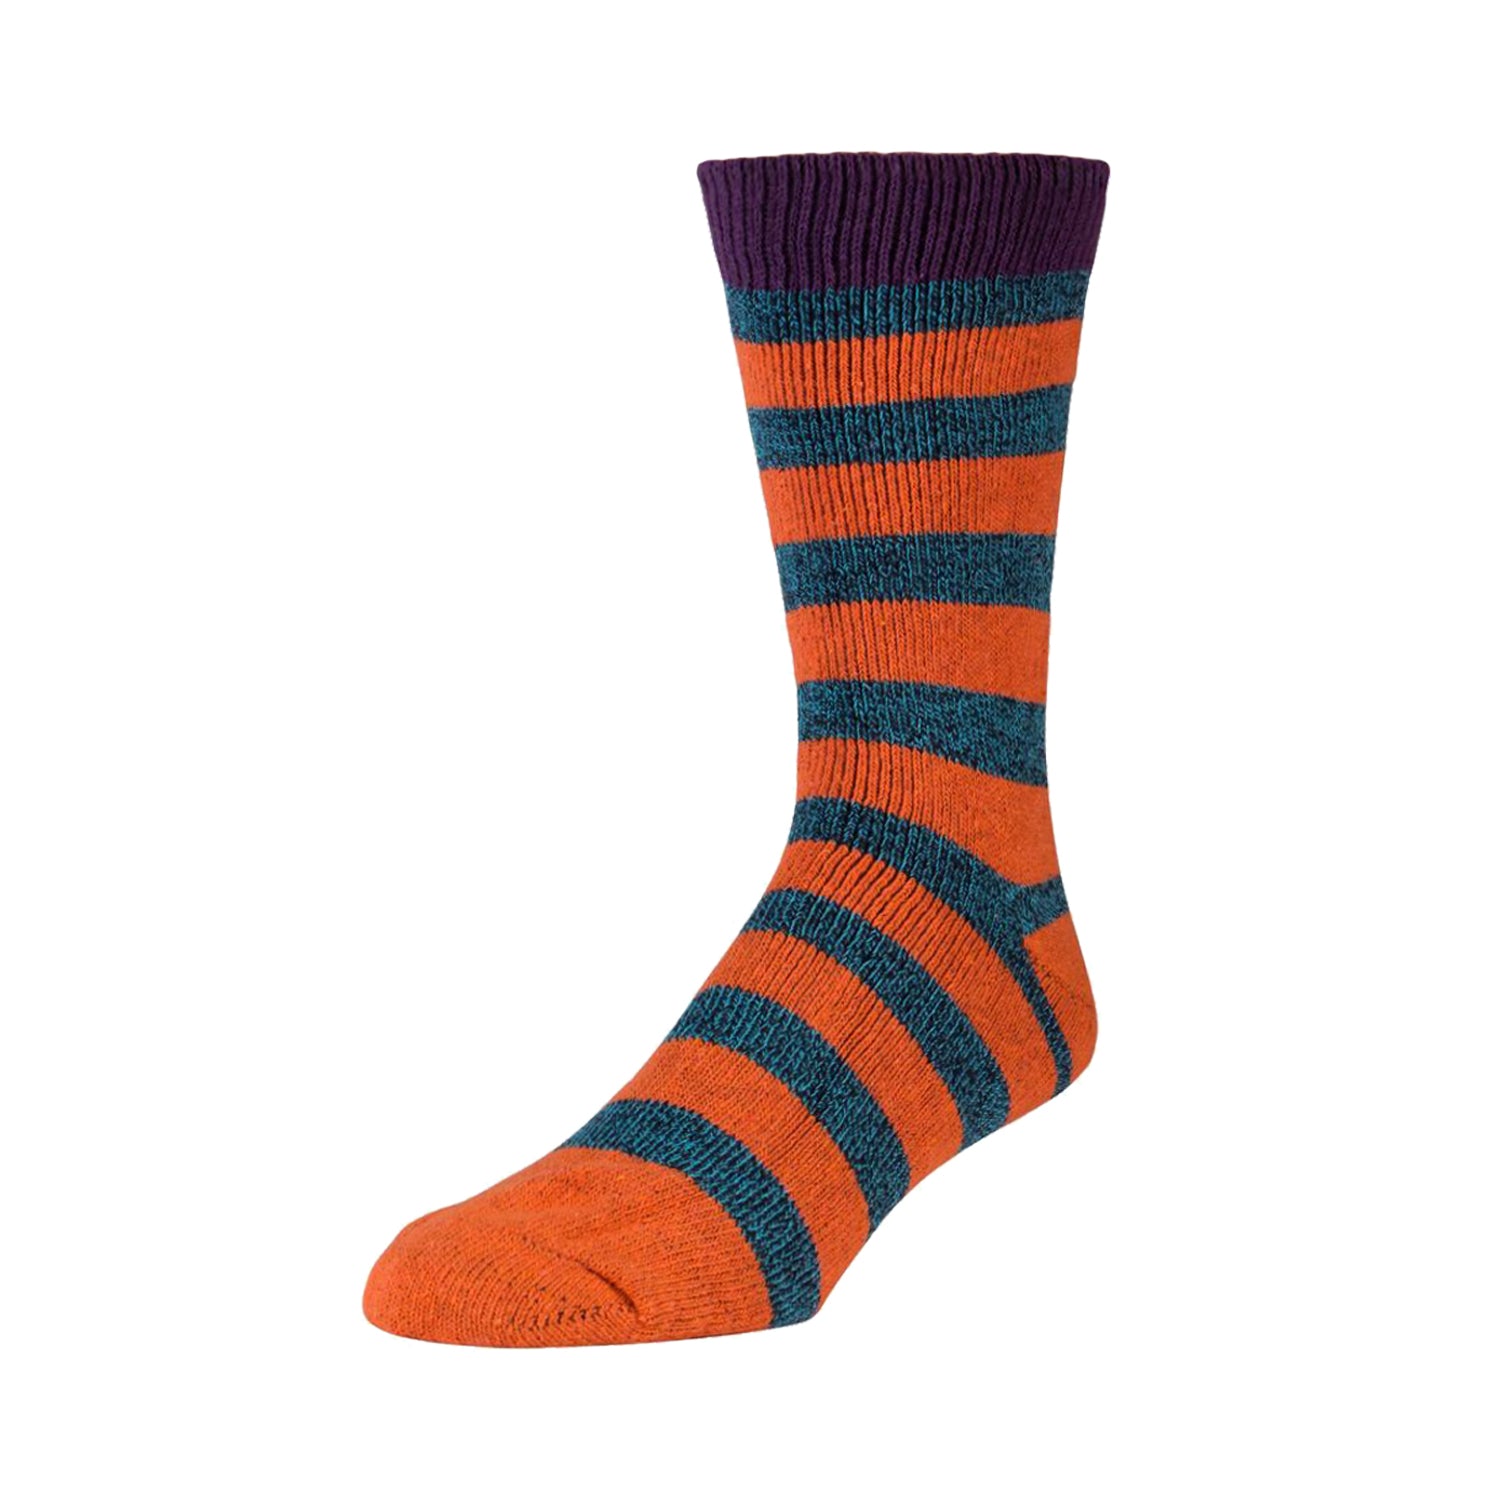 Men's Boot Thermal Hiking Striped Crew Socks, Size 10-13